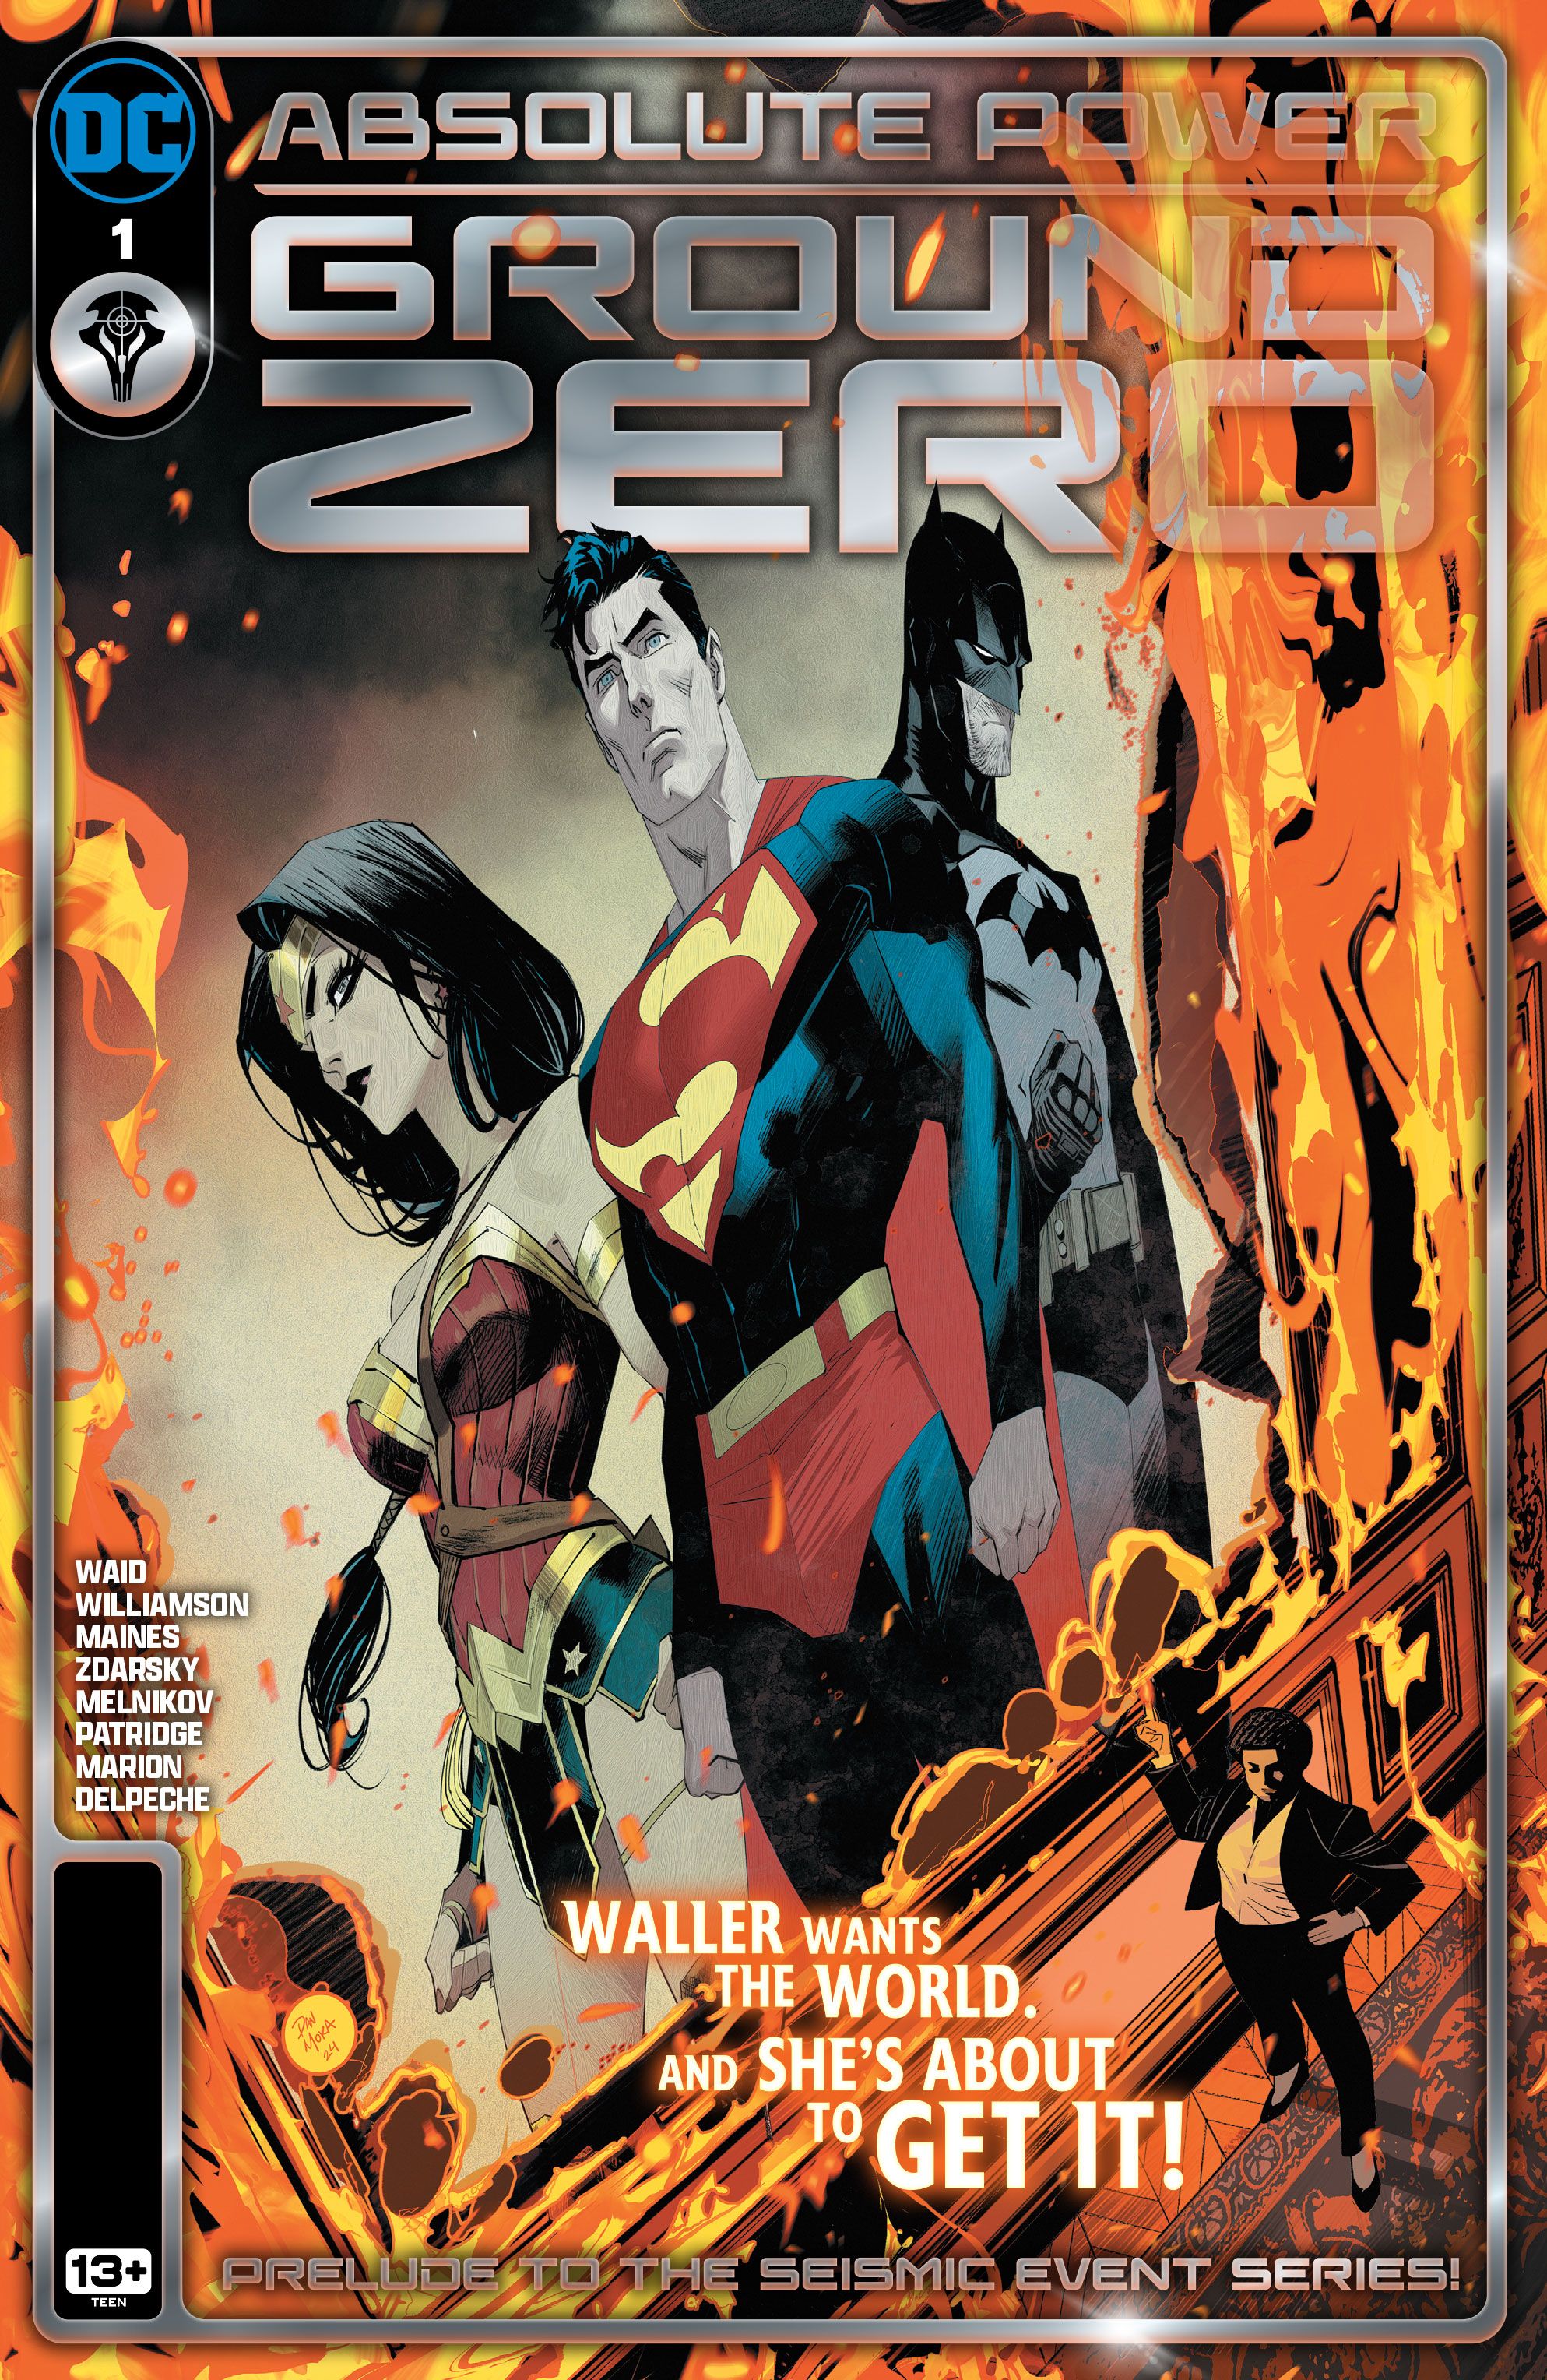 Absoluter Power Ground Zero 1 Main Cover: Amanda Waller standing next to a burning portrait of Batman, Superman, and Wonder Woman.